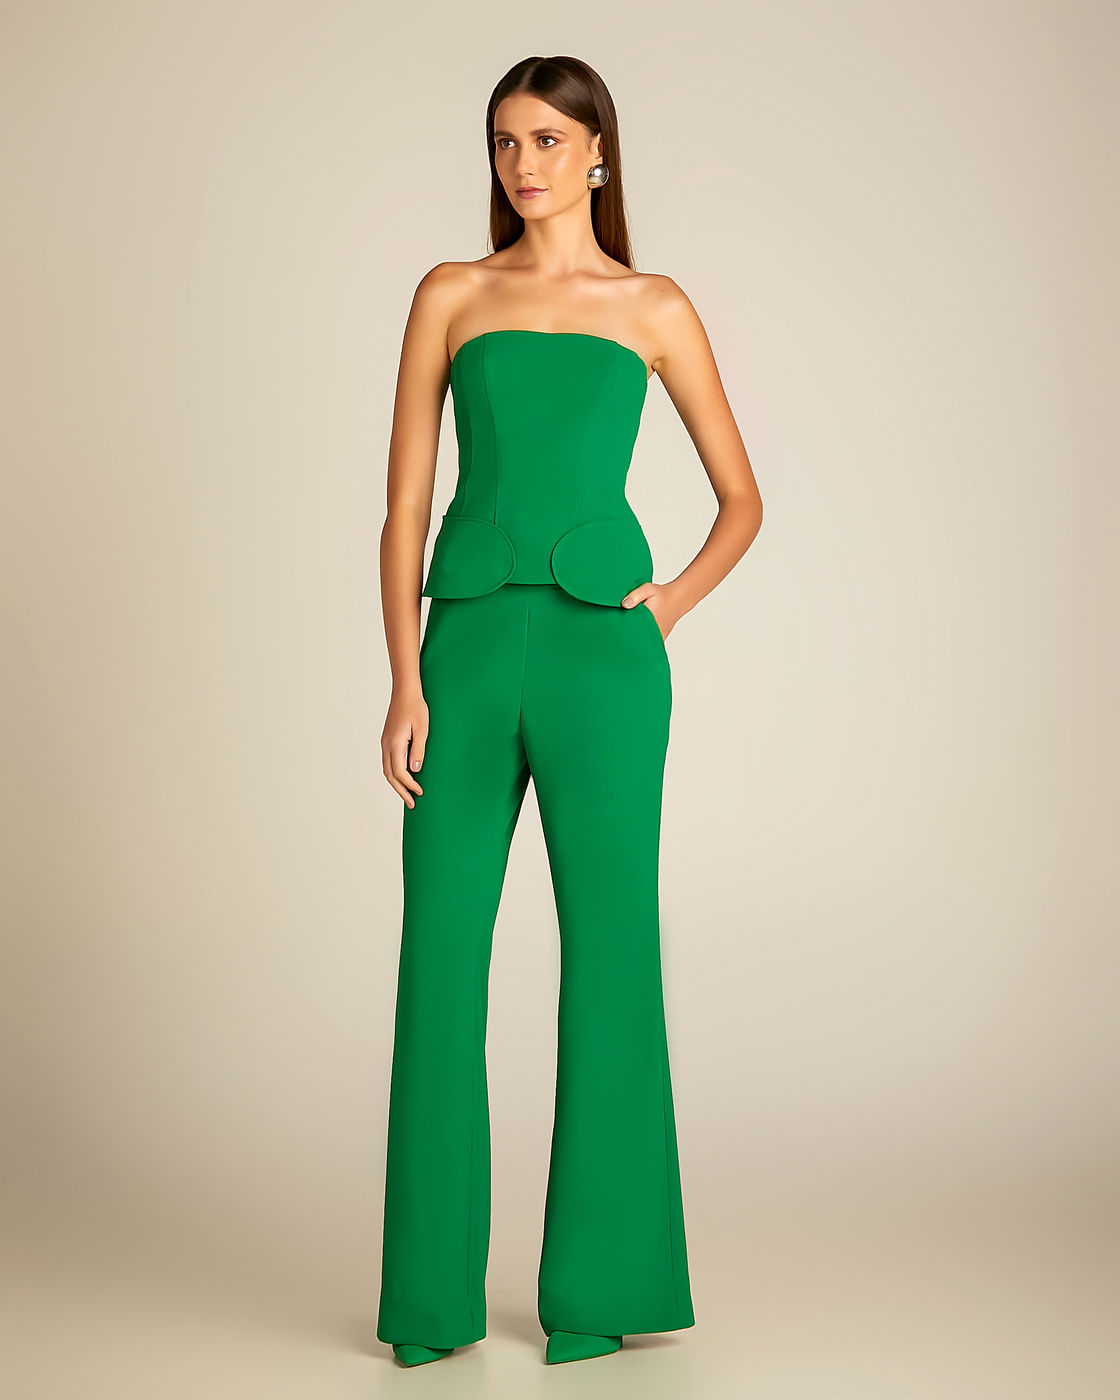 Conjunto verde corset e calça